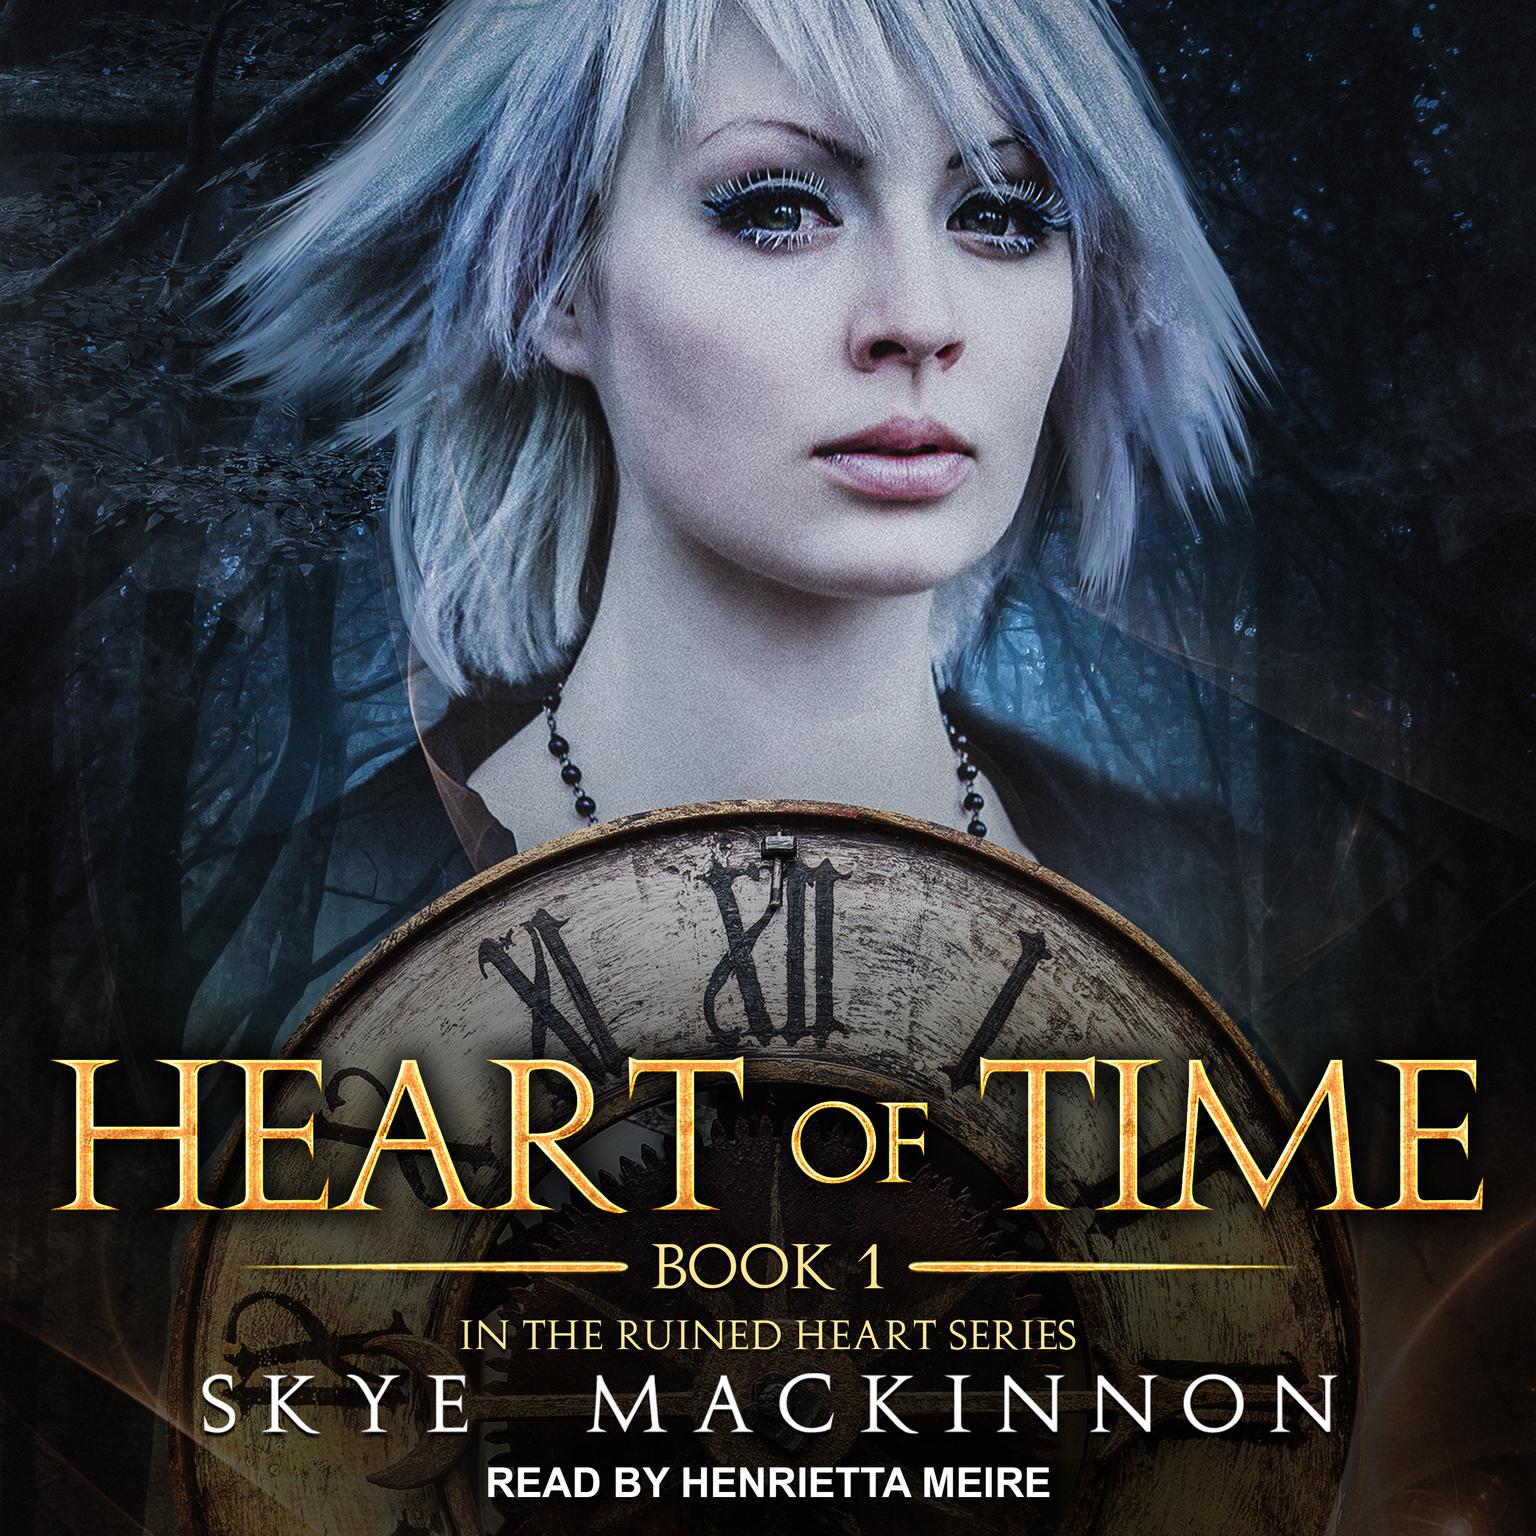 Heart of Time Audiobook, by Skye MacKinnon